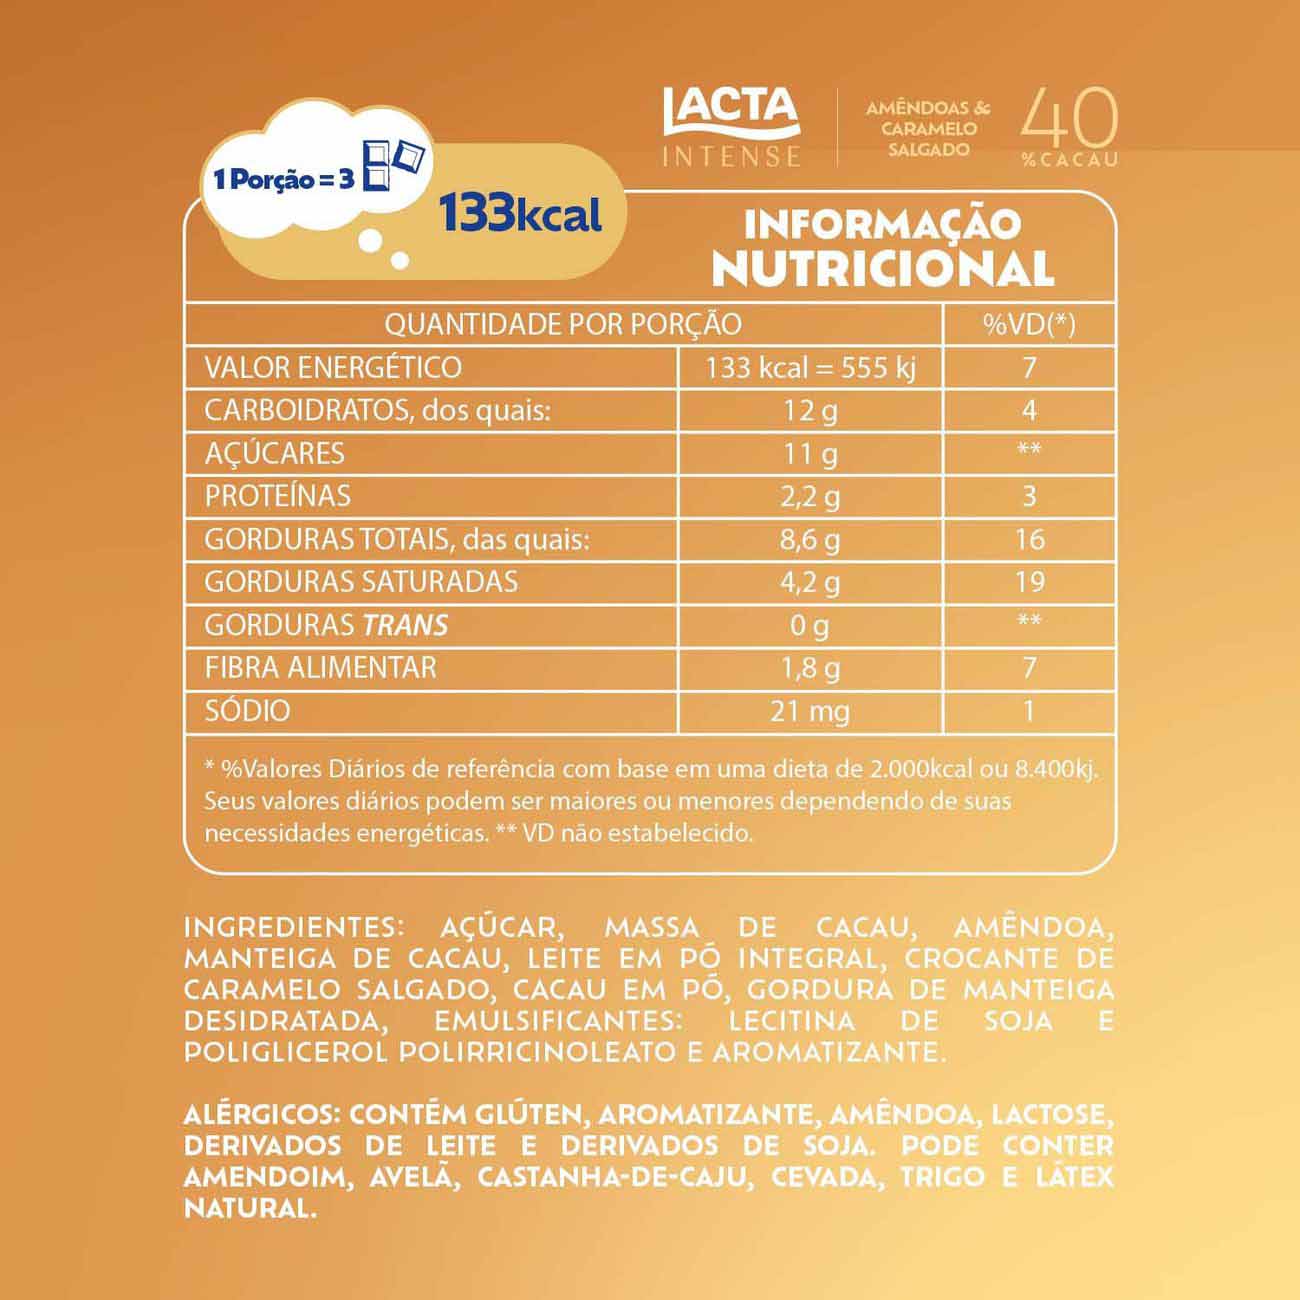 Chocolate Lacta Intense Meio Amargo 40% Cacau Amndoas E Caramelo Salgado 85g